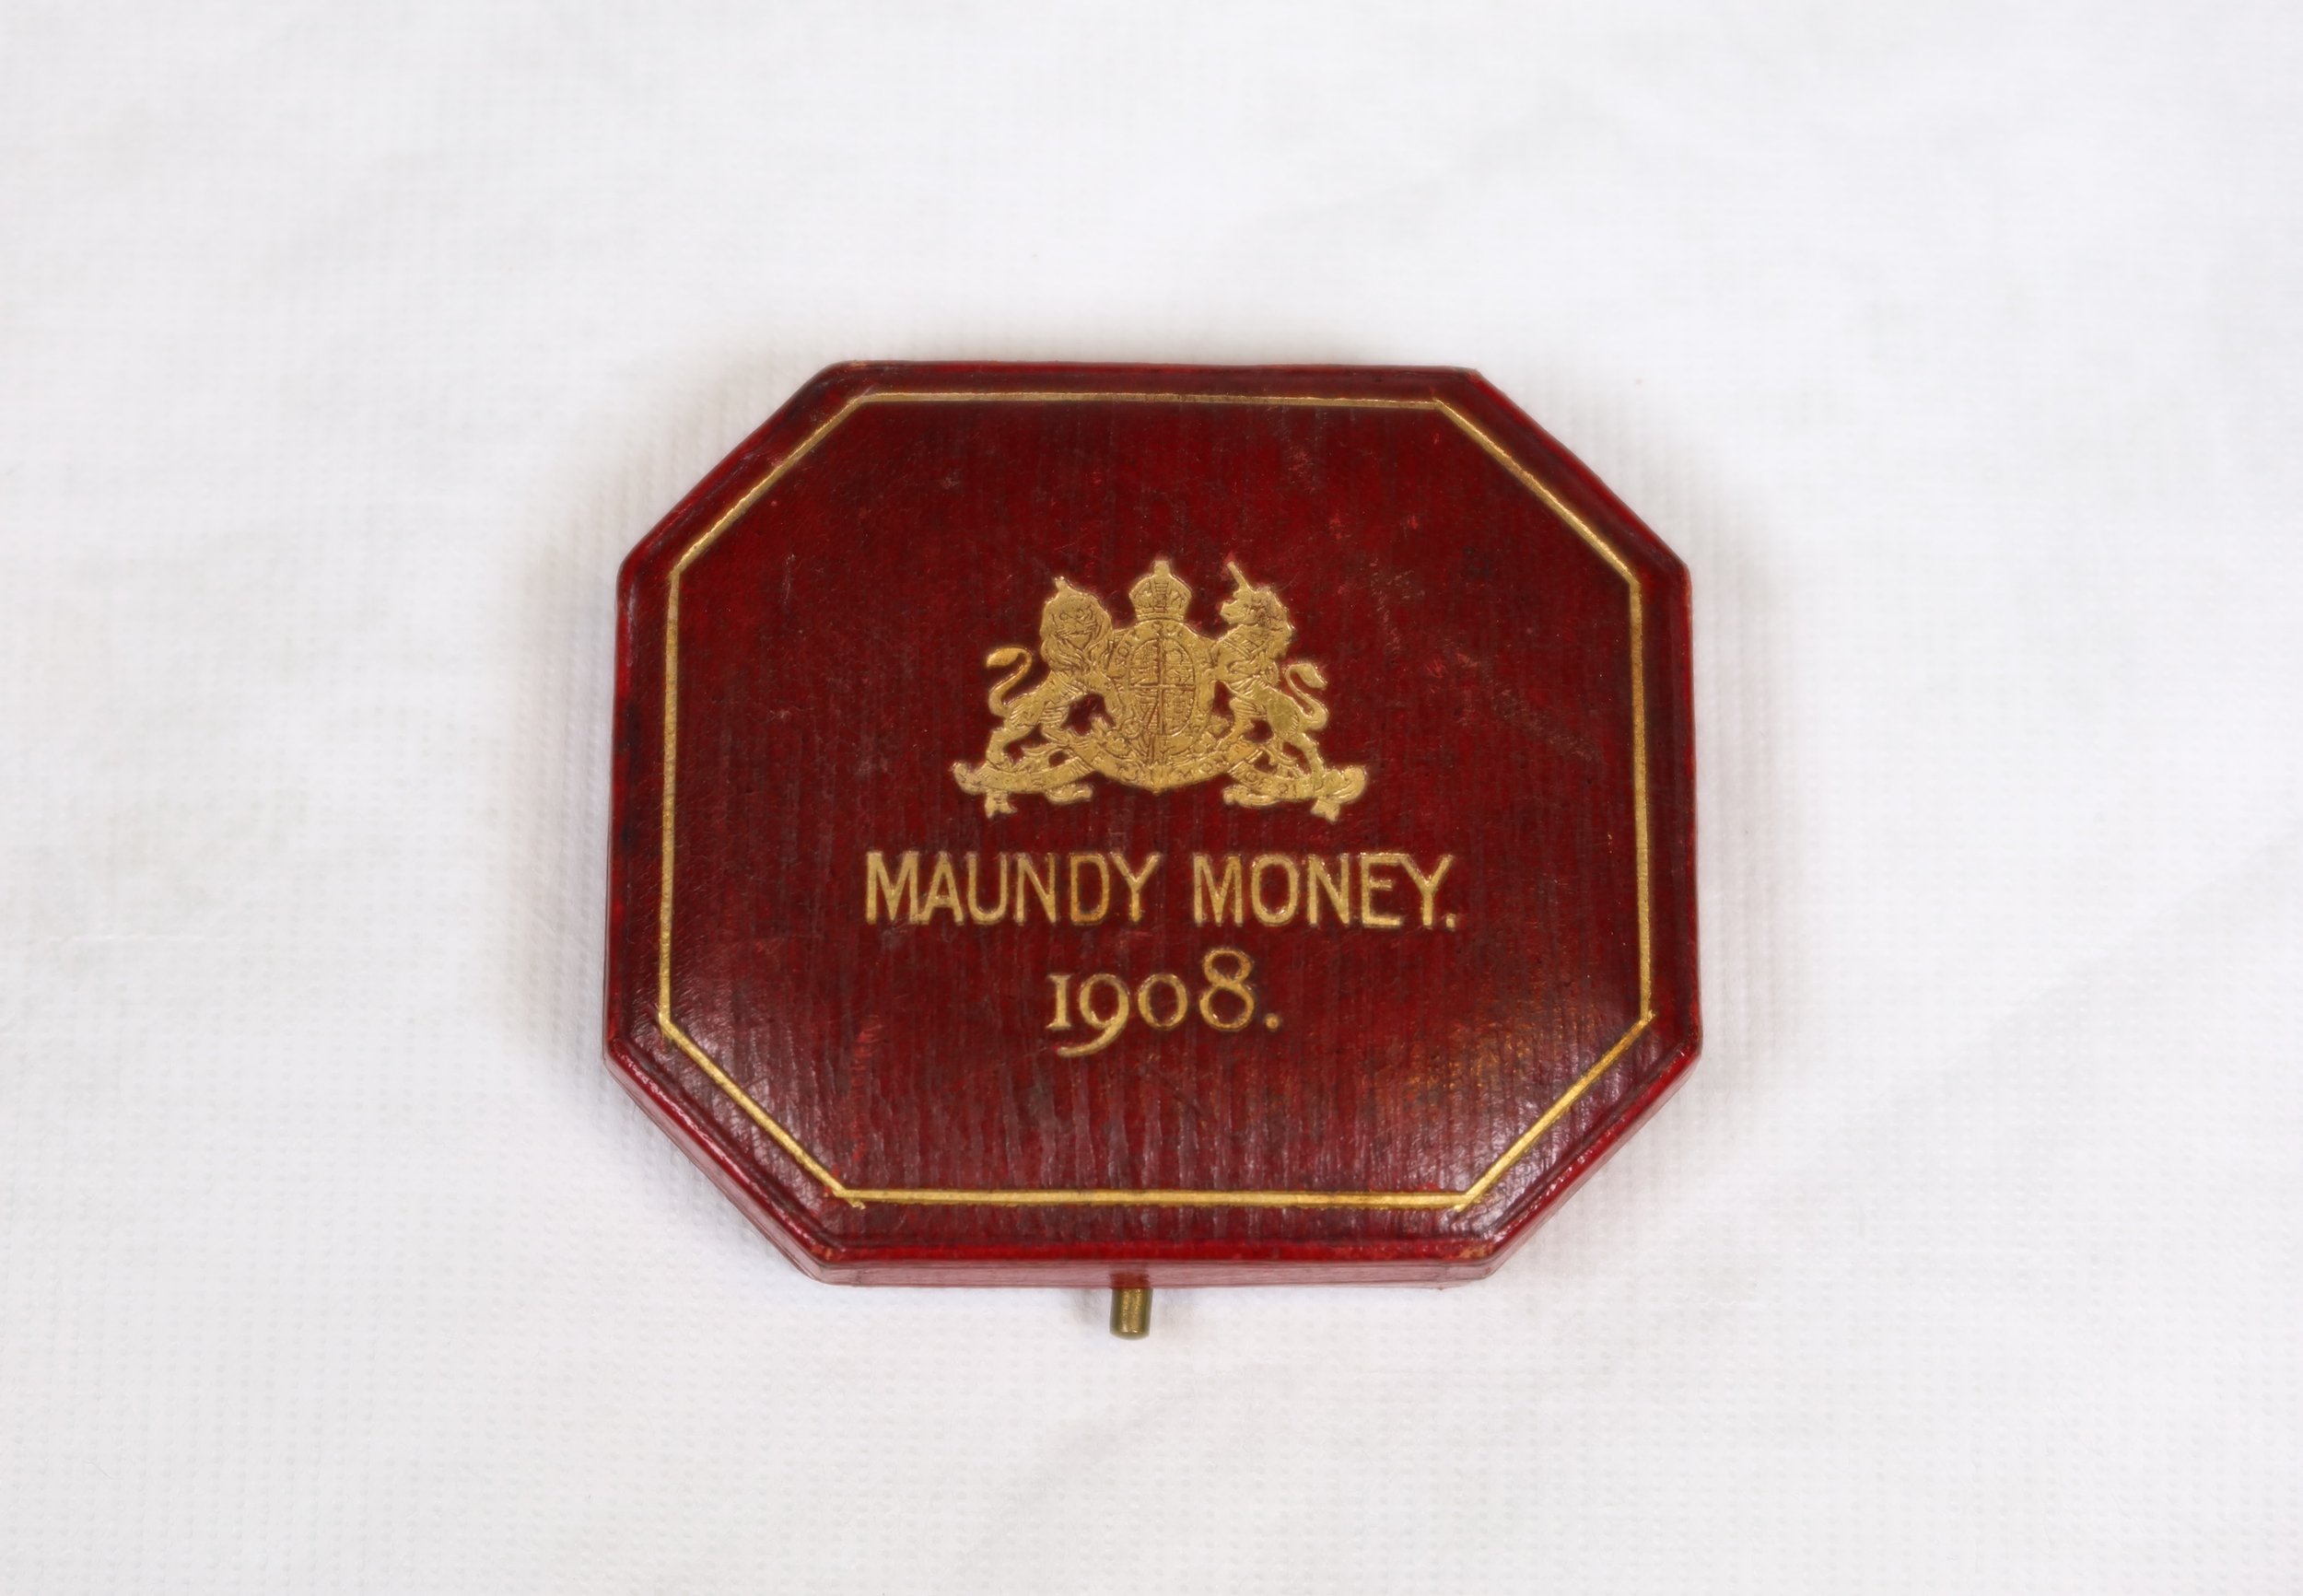  1908 Maundy money case 